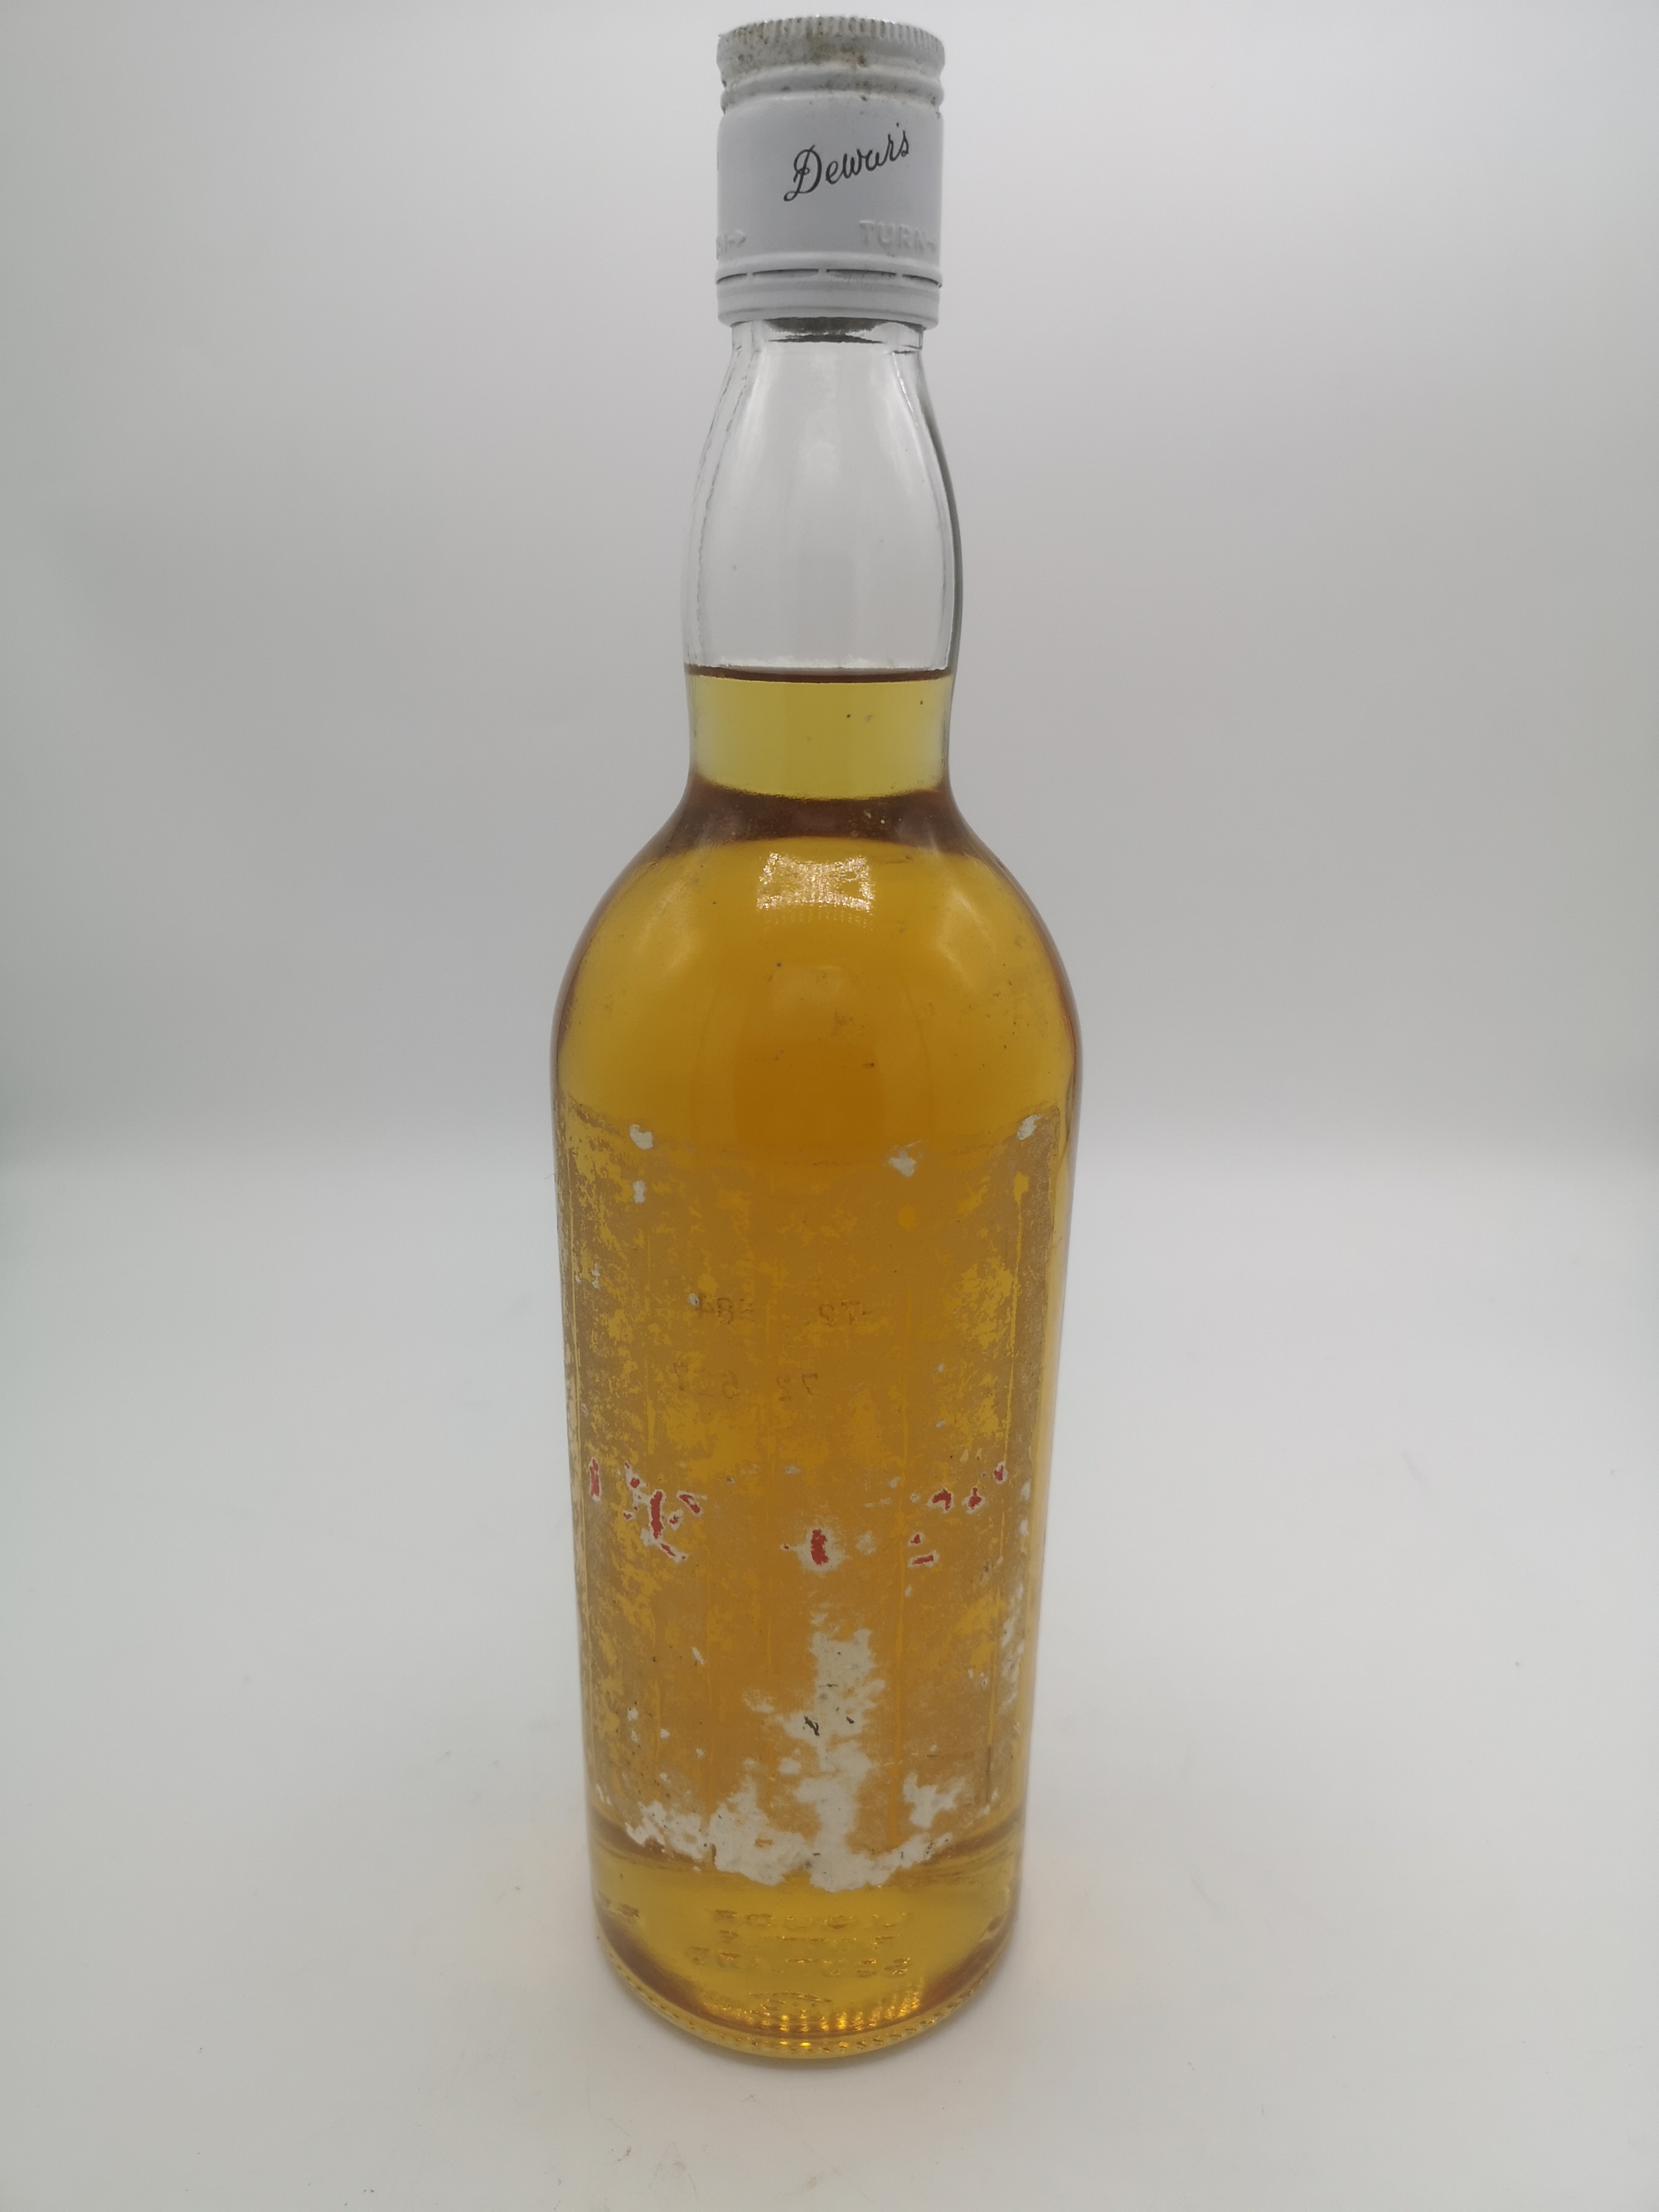 Two bottles of Dewar's Scotch whisky - Image 9 of 11